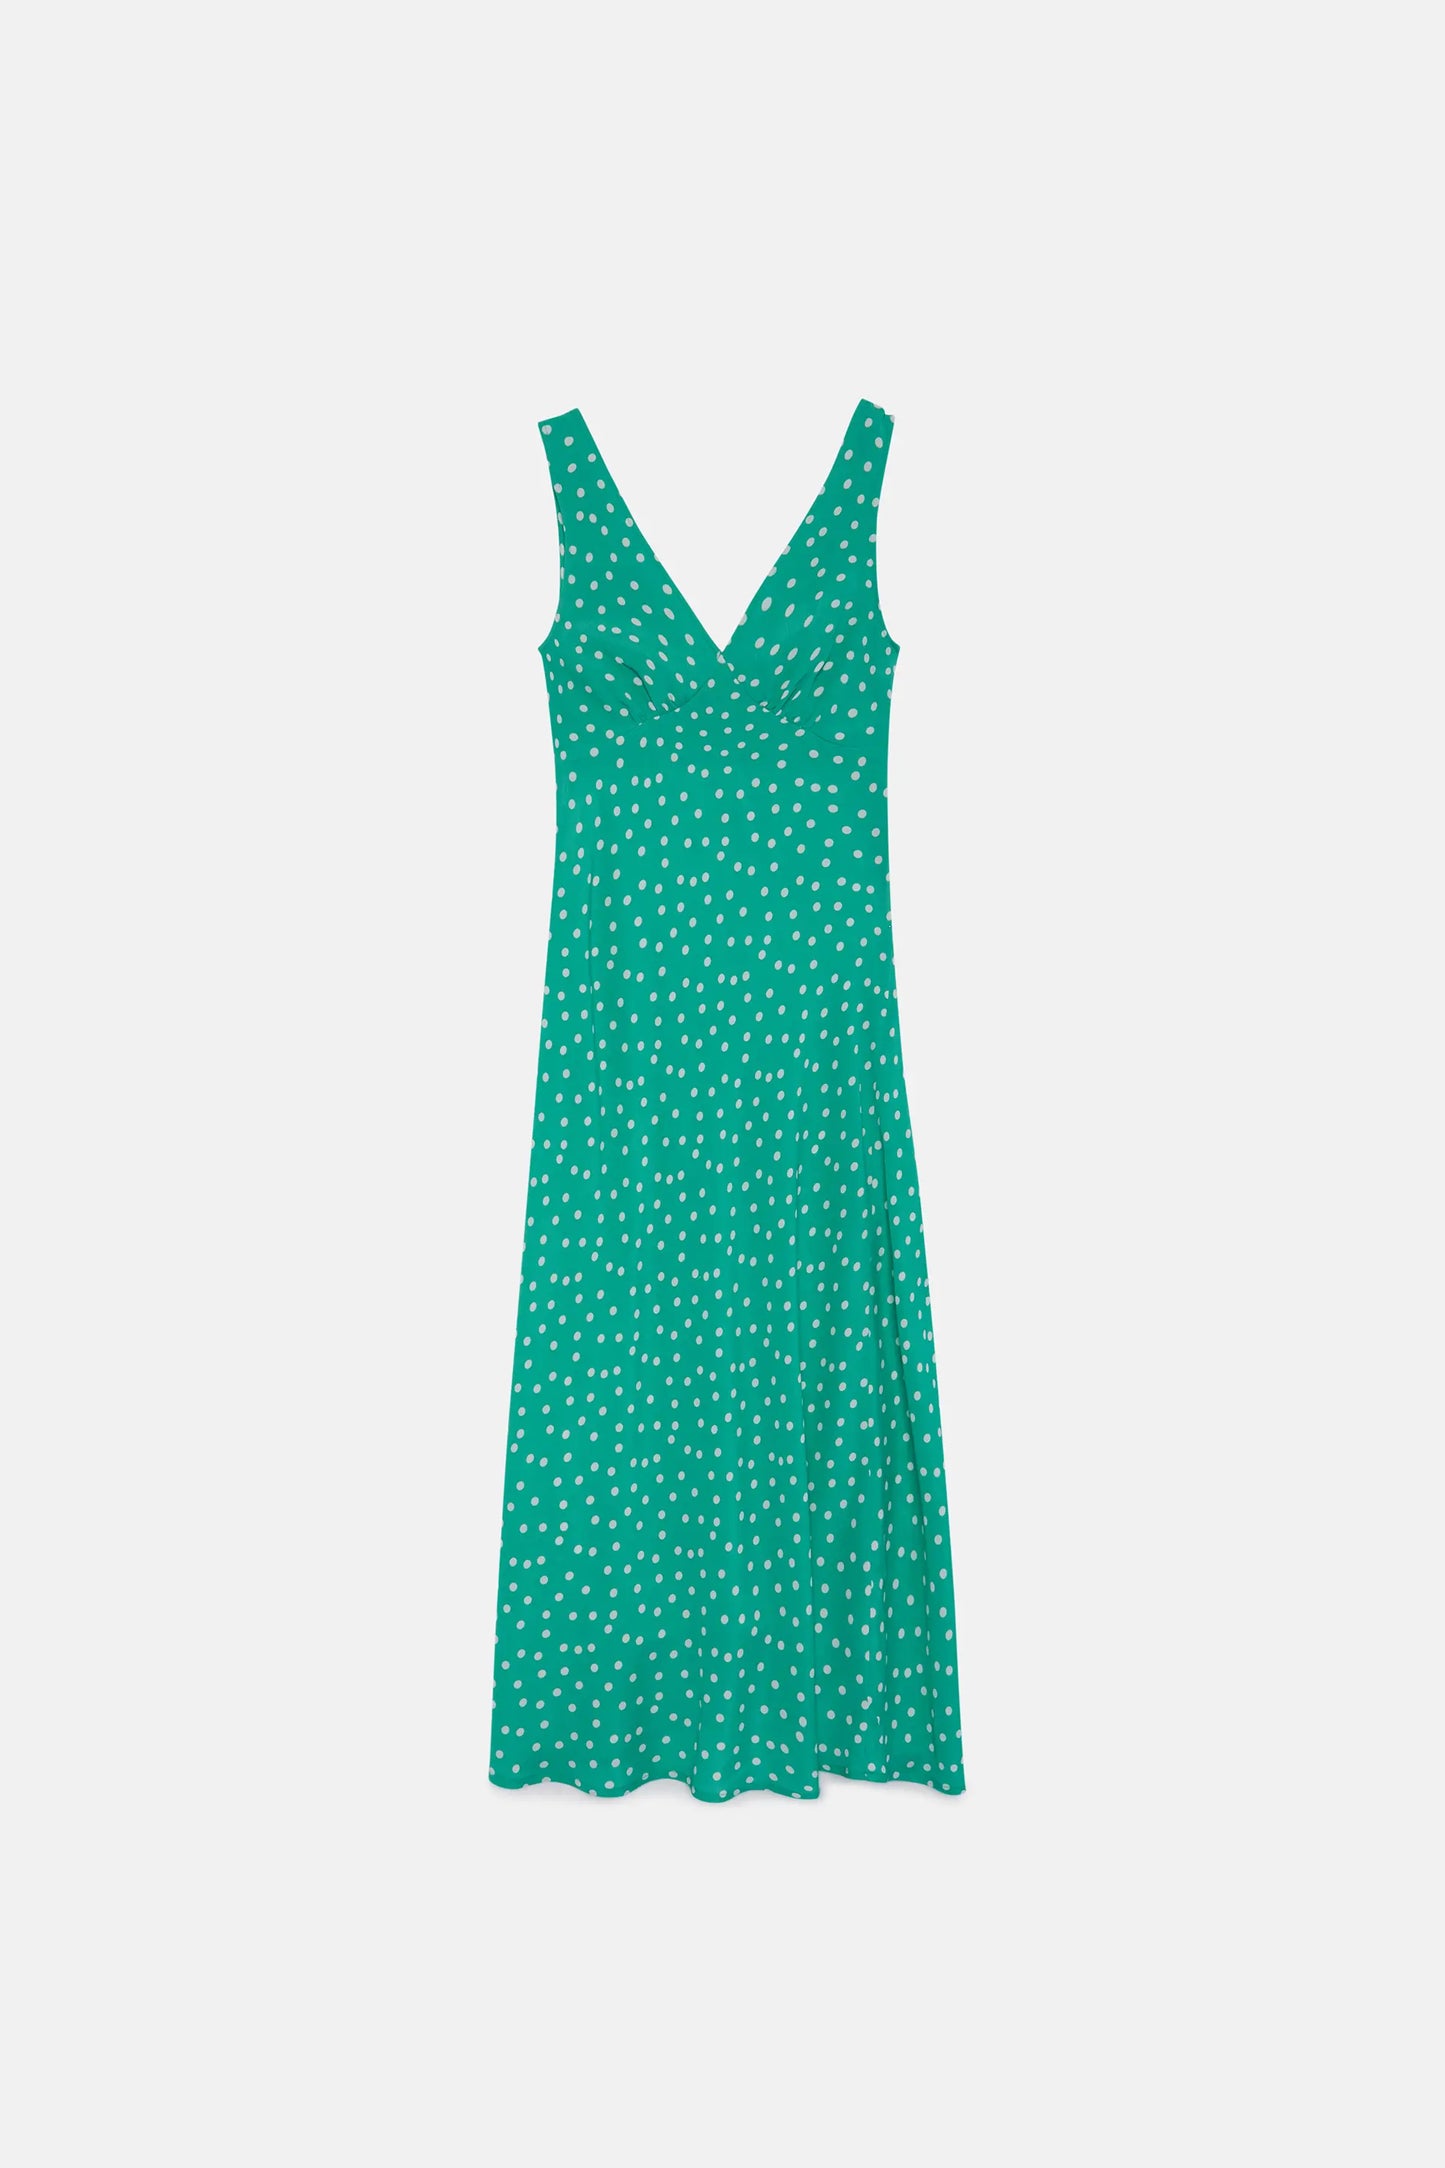 Long green polka dot dress